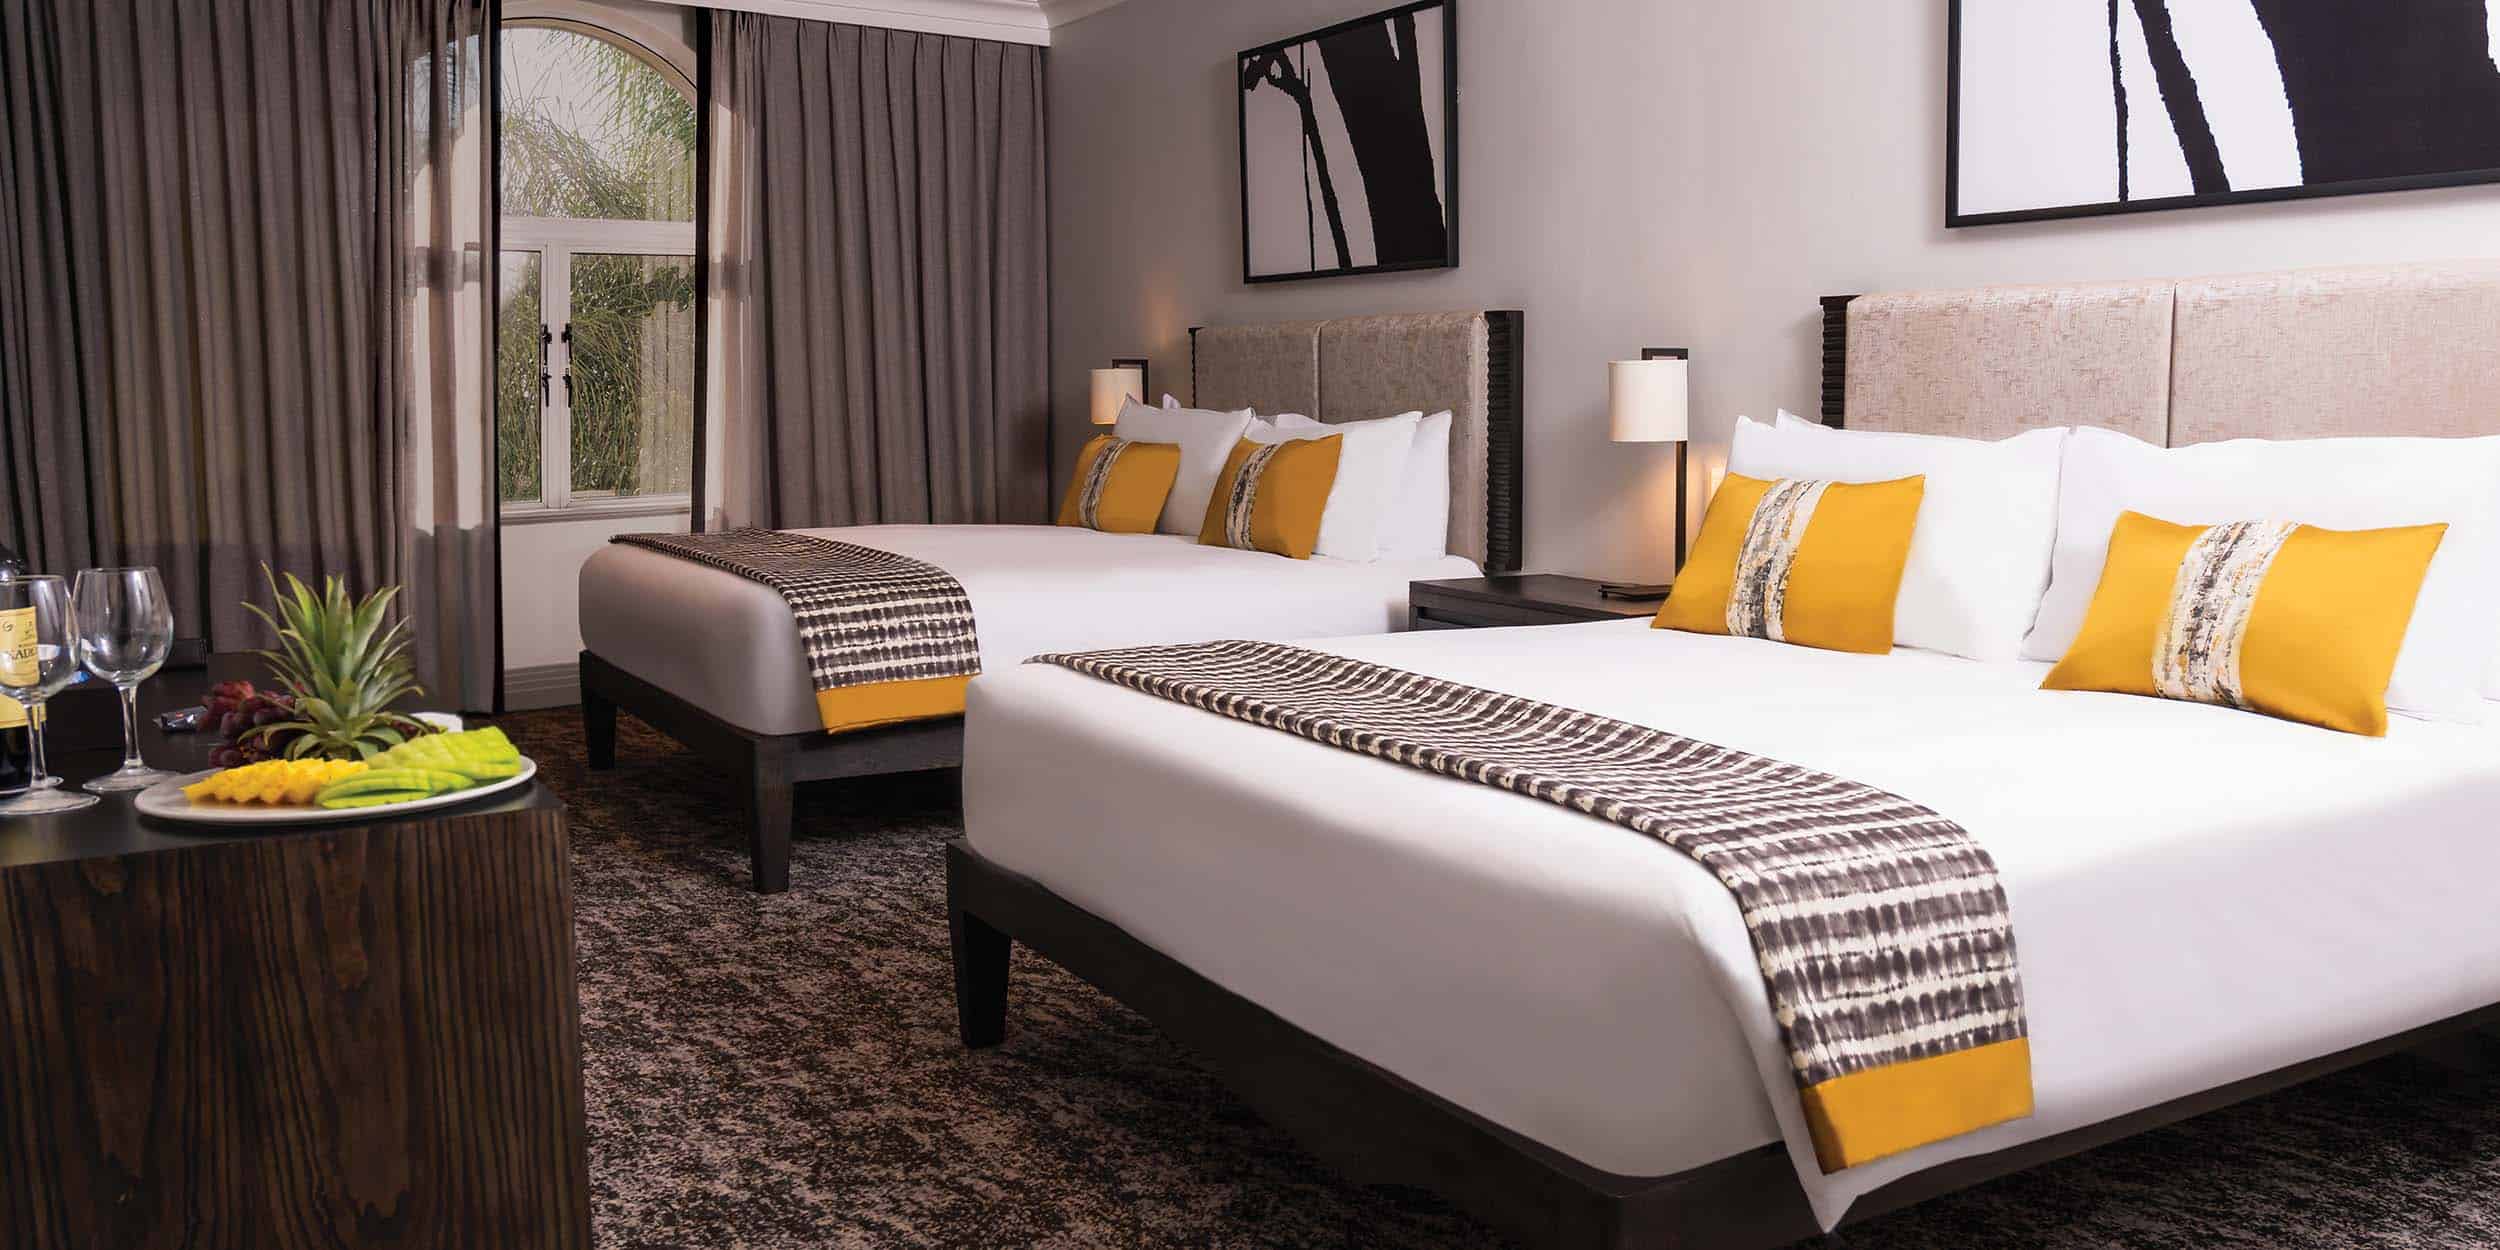 Room Image_2500x1250_Golden Horse Hotel Exec 2 beds rev